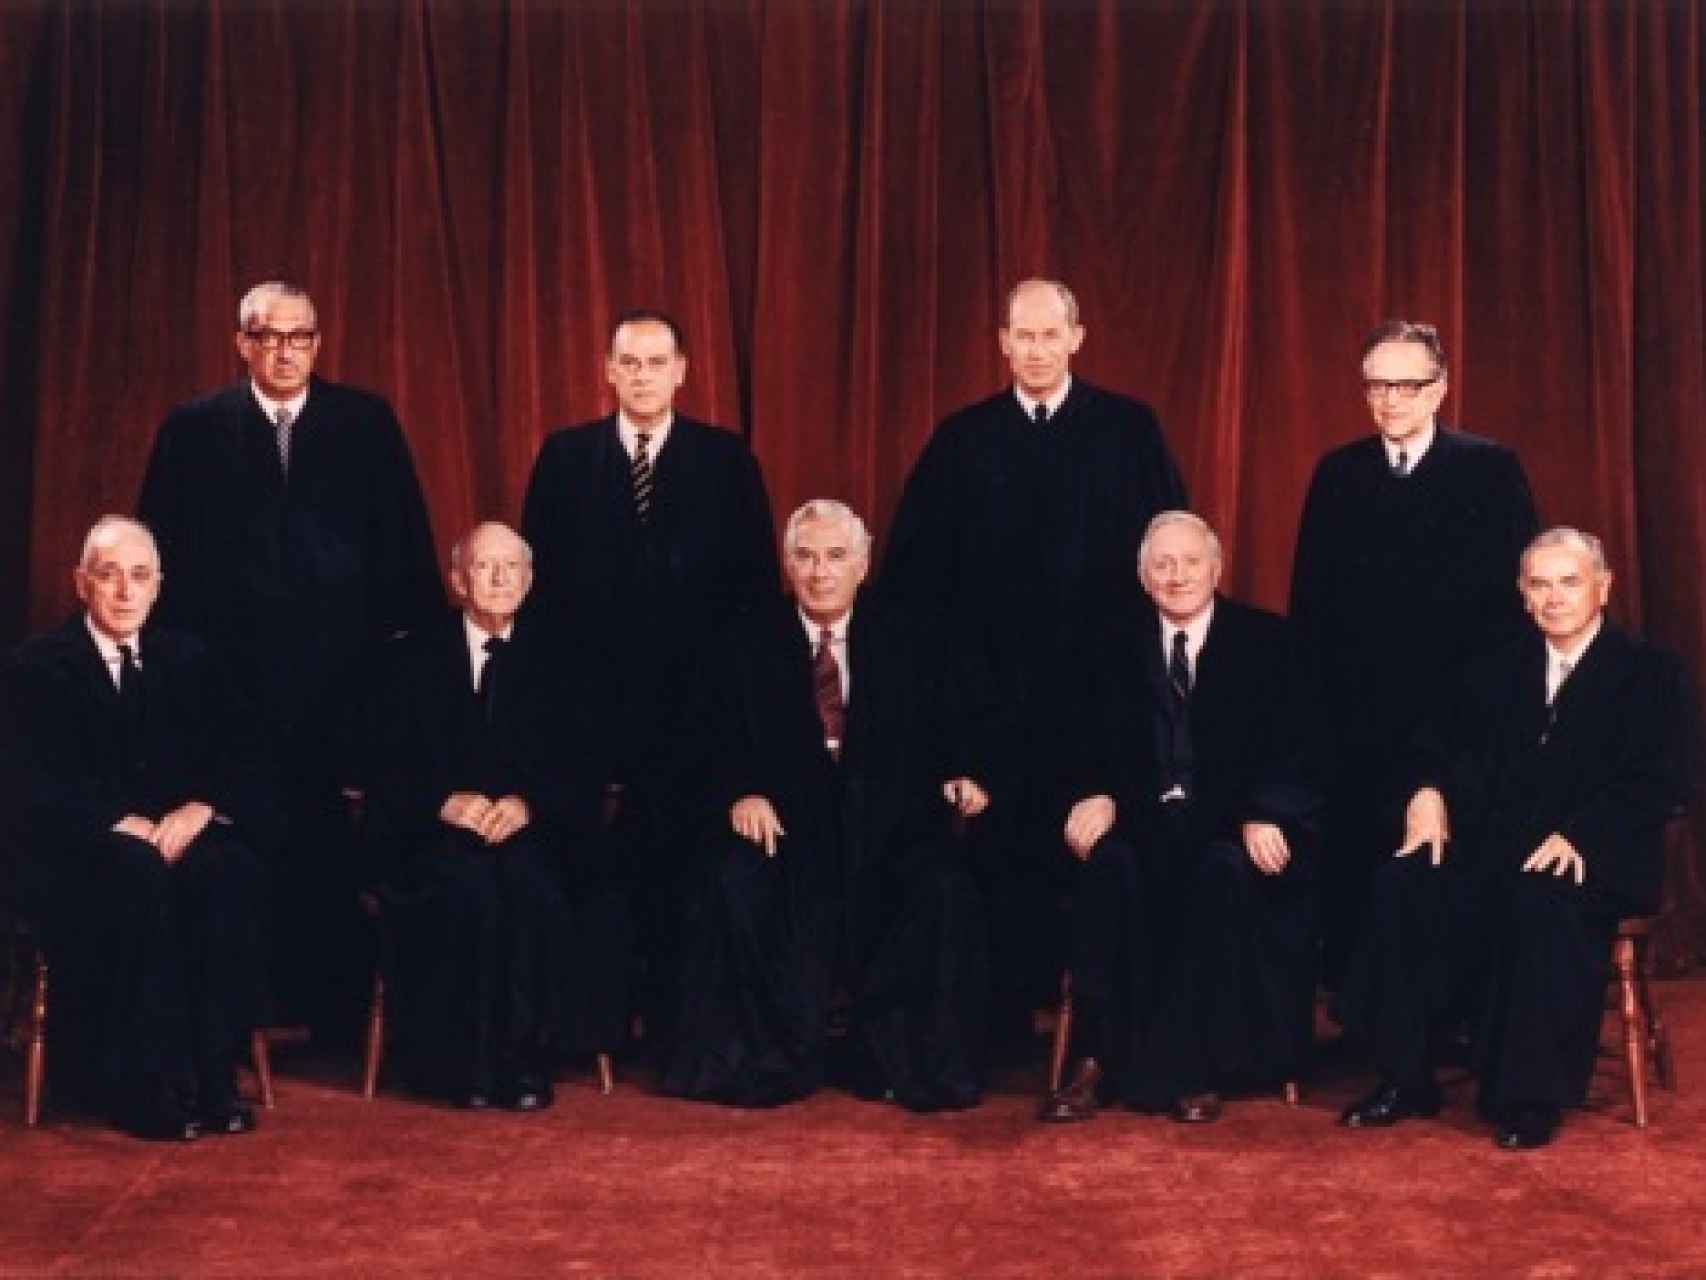 Los miembros del Tribunal Supremo de Estados Unidos en 1971: Hugo L. Black, William O. Douglas, John M. Harlan, William J. Brennan, Jr., Potter Stewart, Byron R. White, Thurgood Marshall, Warren E. Burger, and Harry A. Blackmun.